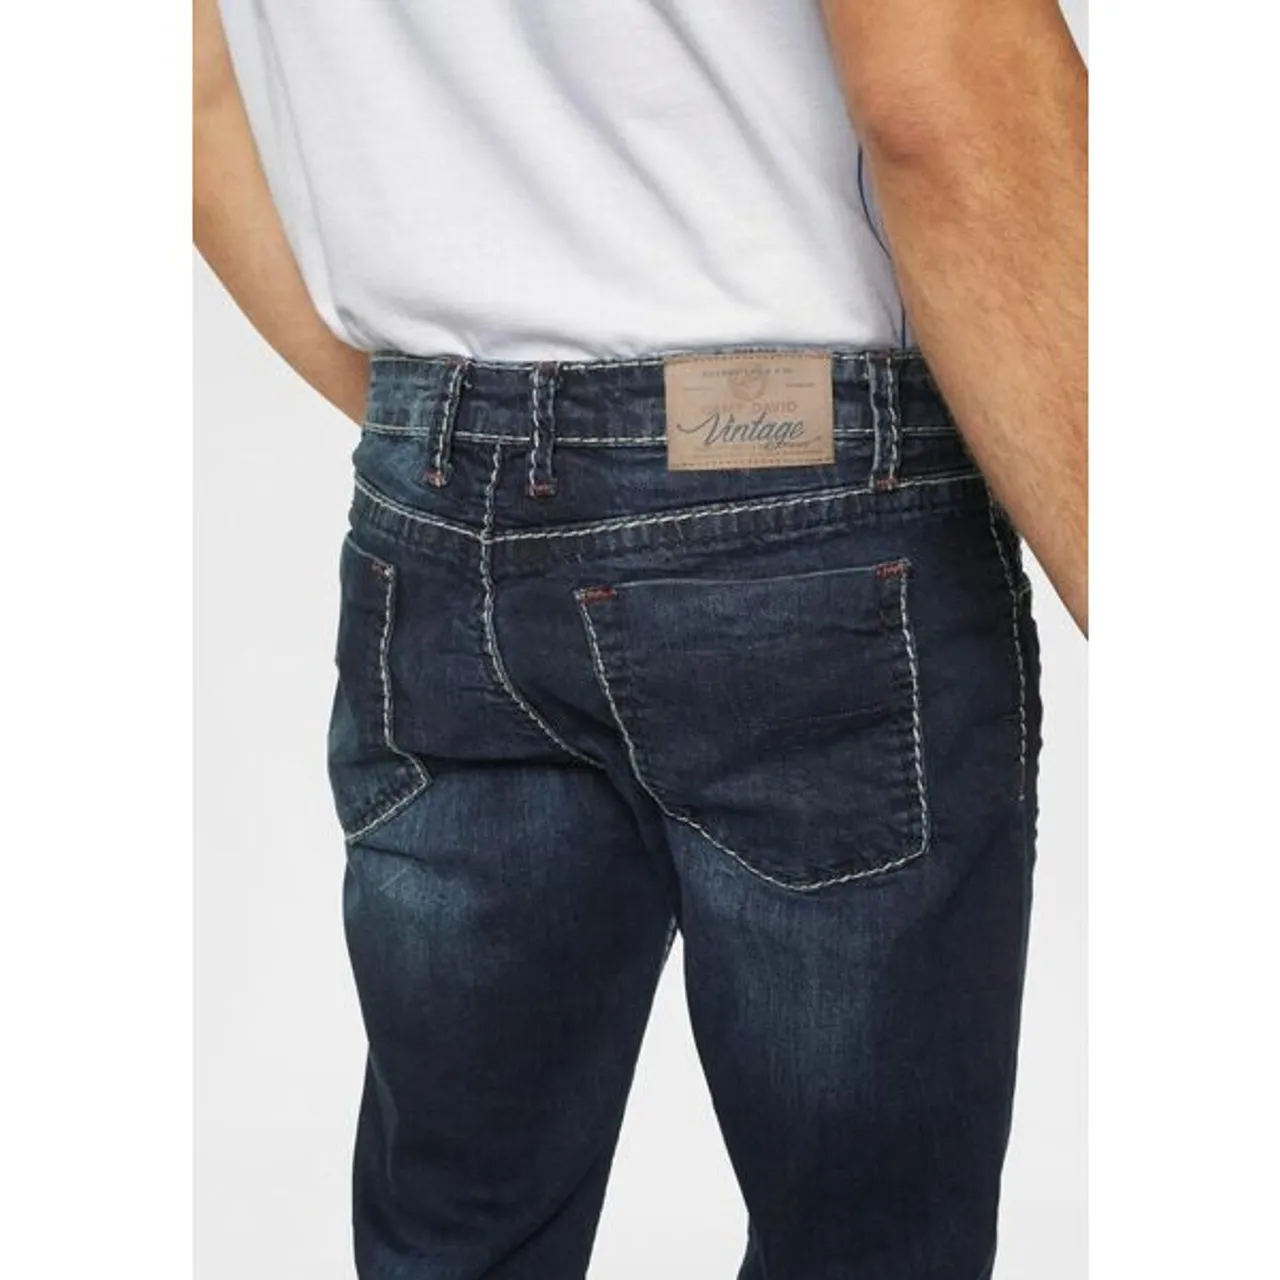 Straight-Jeans CAMP DAVID "NI:CO:R611" Gr. 36, Länge 34, blau (dark, used) Herren Jeans Straight Fit